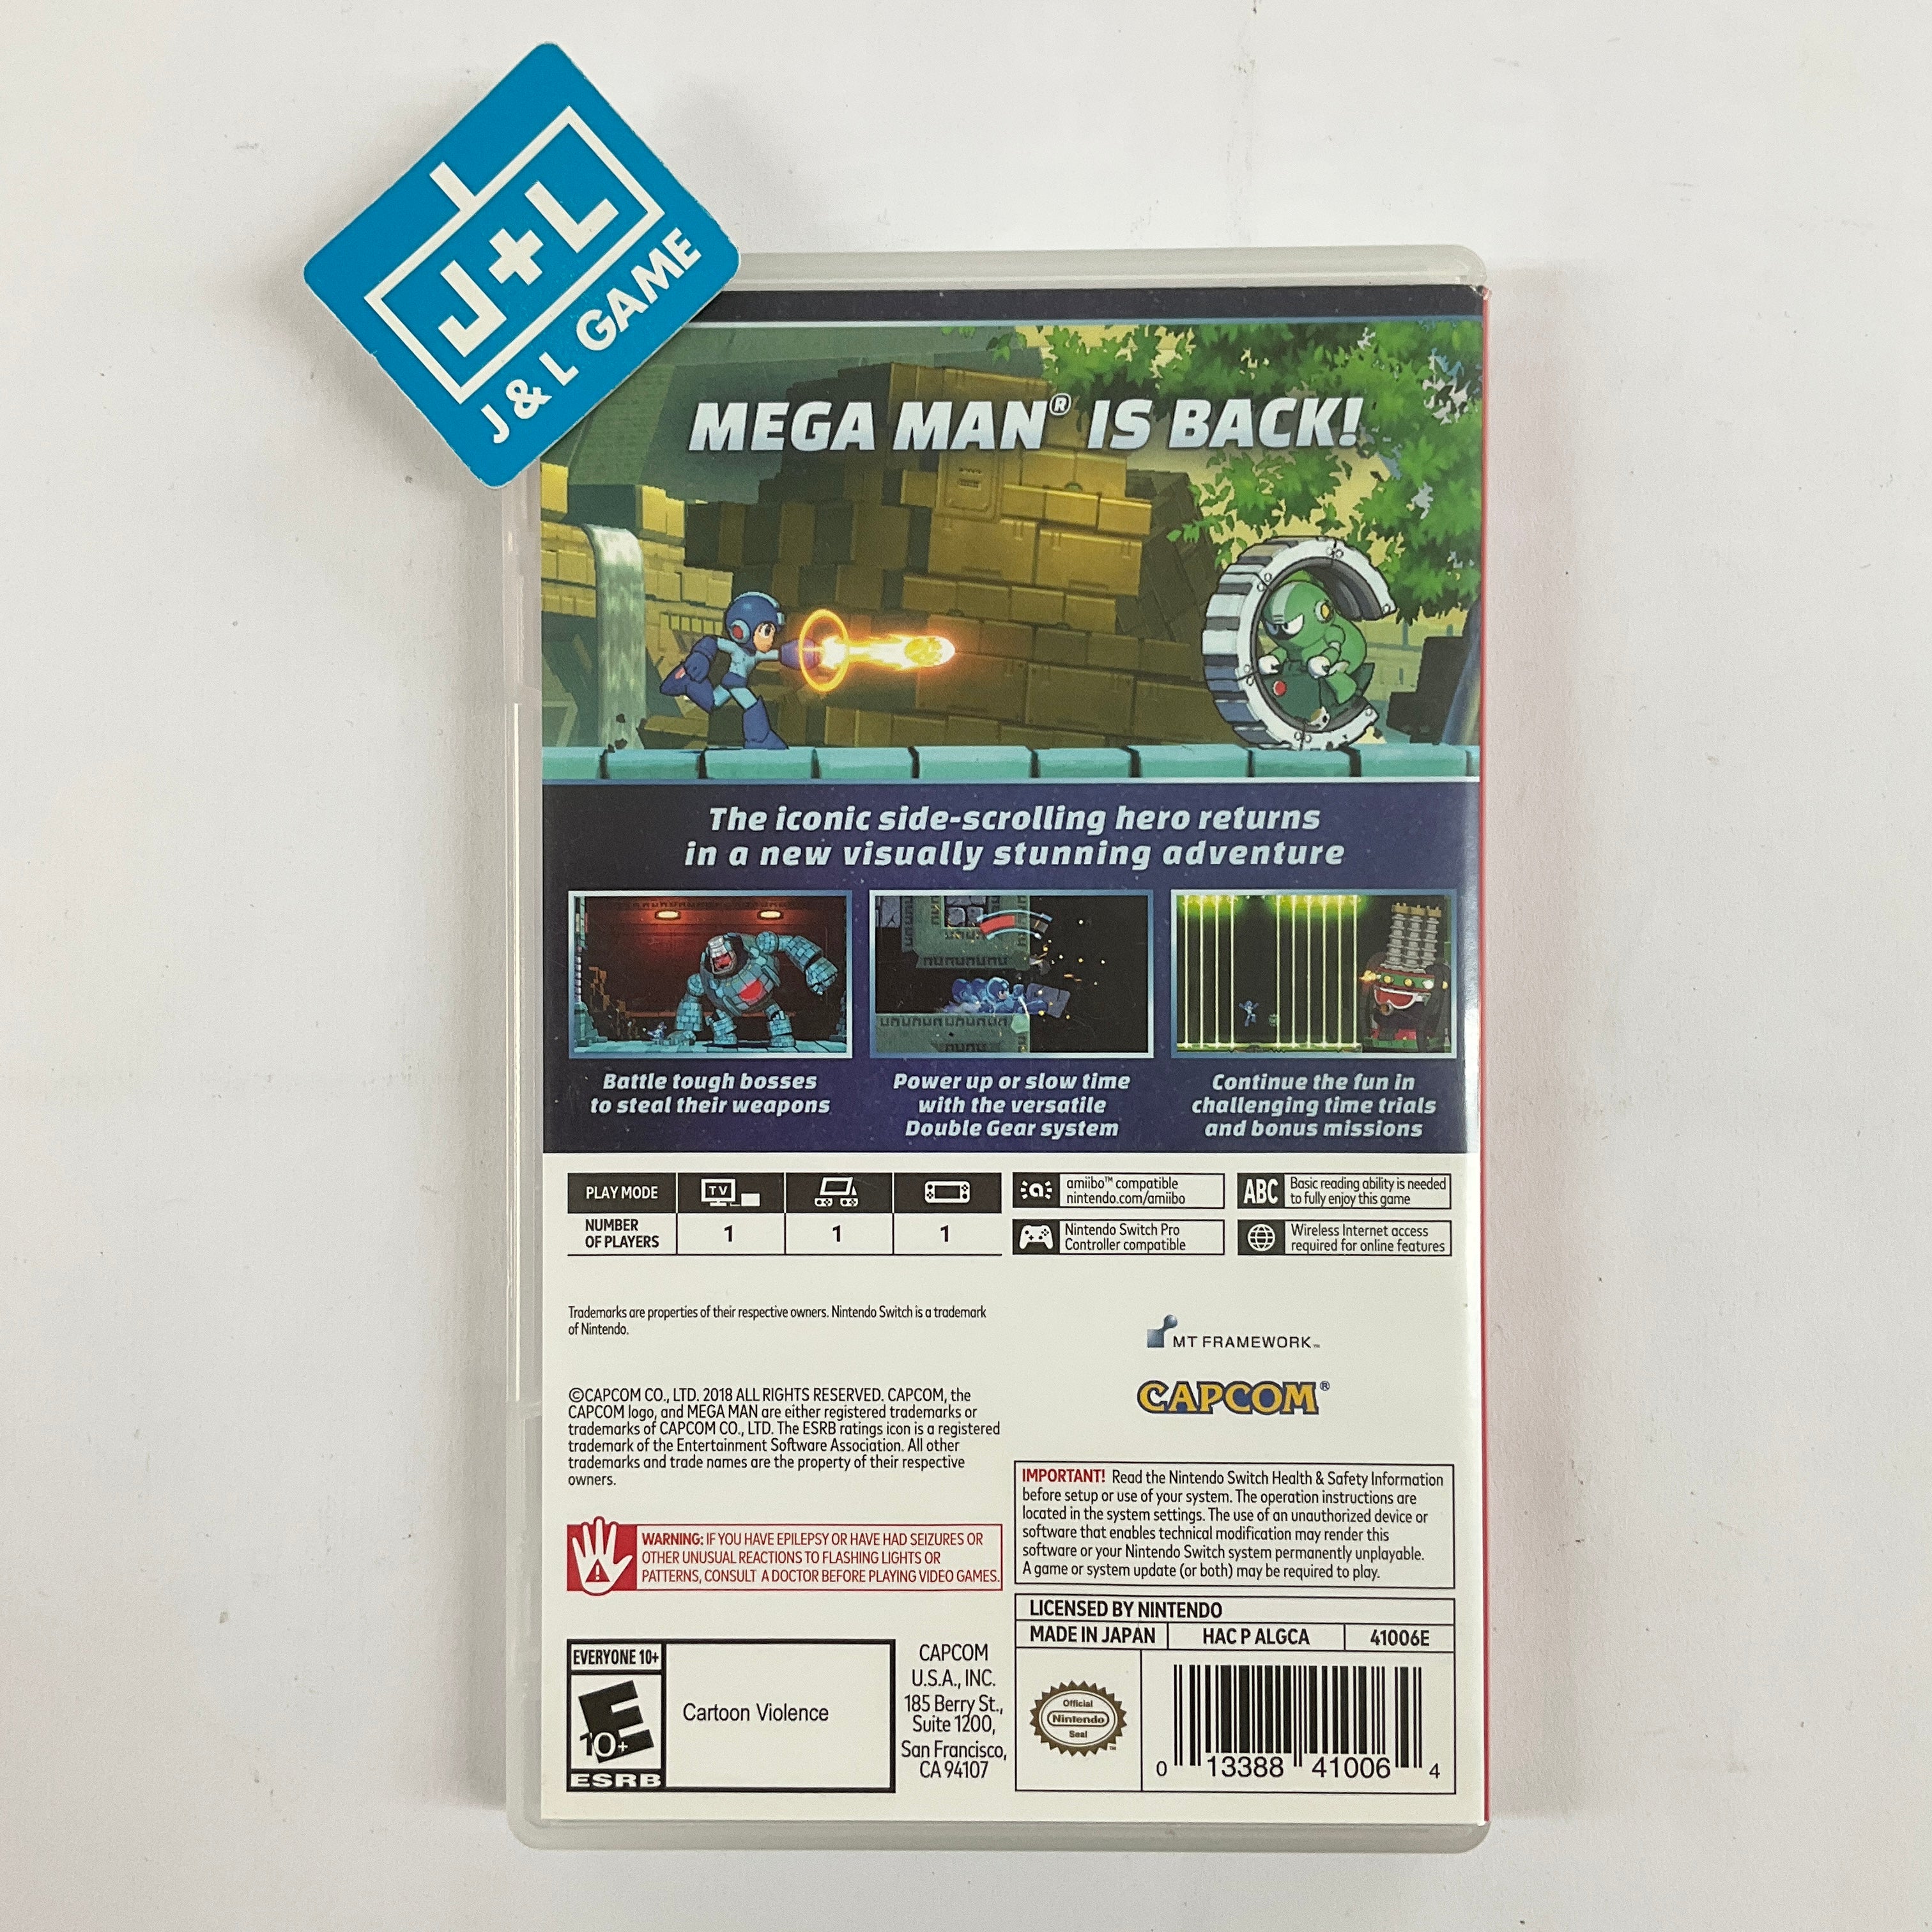 Mega Man 11 - (NSW) Nintendo Switch [Pre-Owned] Video Games Capcom   